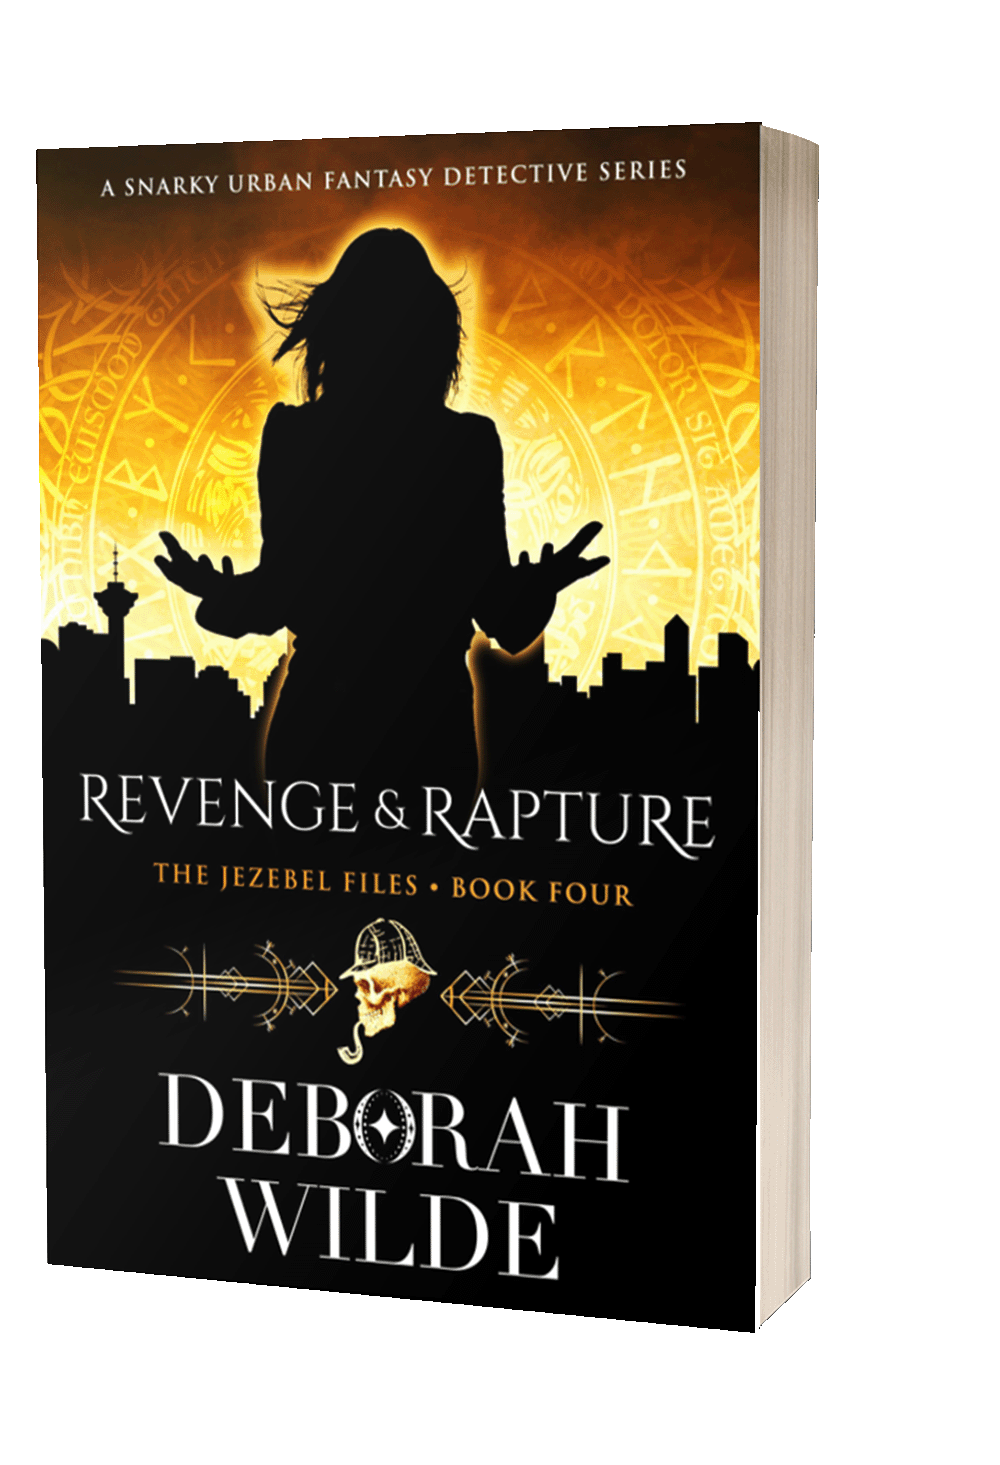 Paperback of Revenge & Rapture book 4 in The Jezebel Files, an urban fantasy detective fiction by Deborah Wilde.